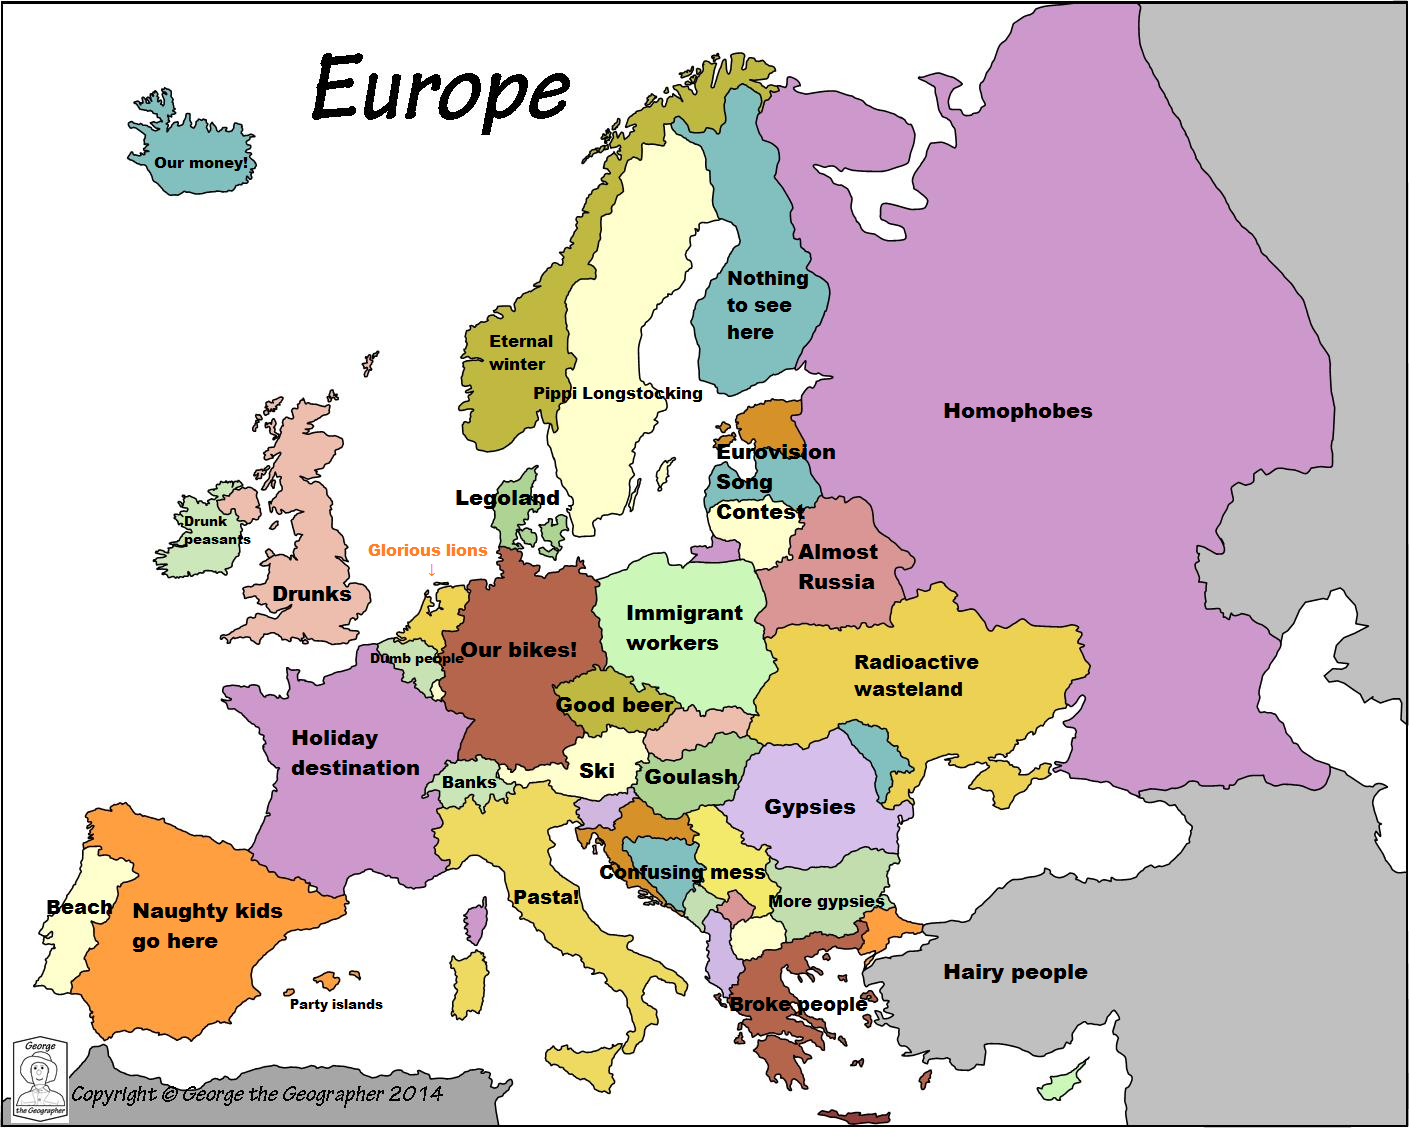 Europe according to the Dutch - Vivid Maps